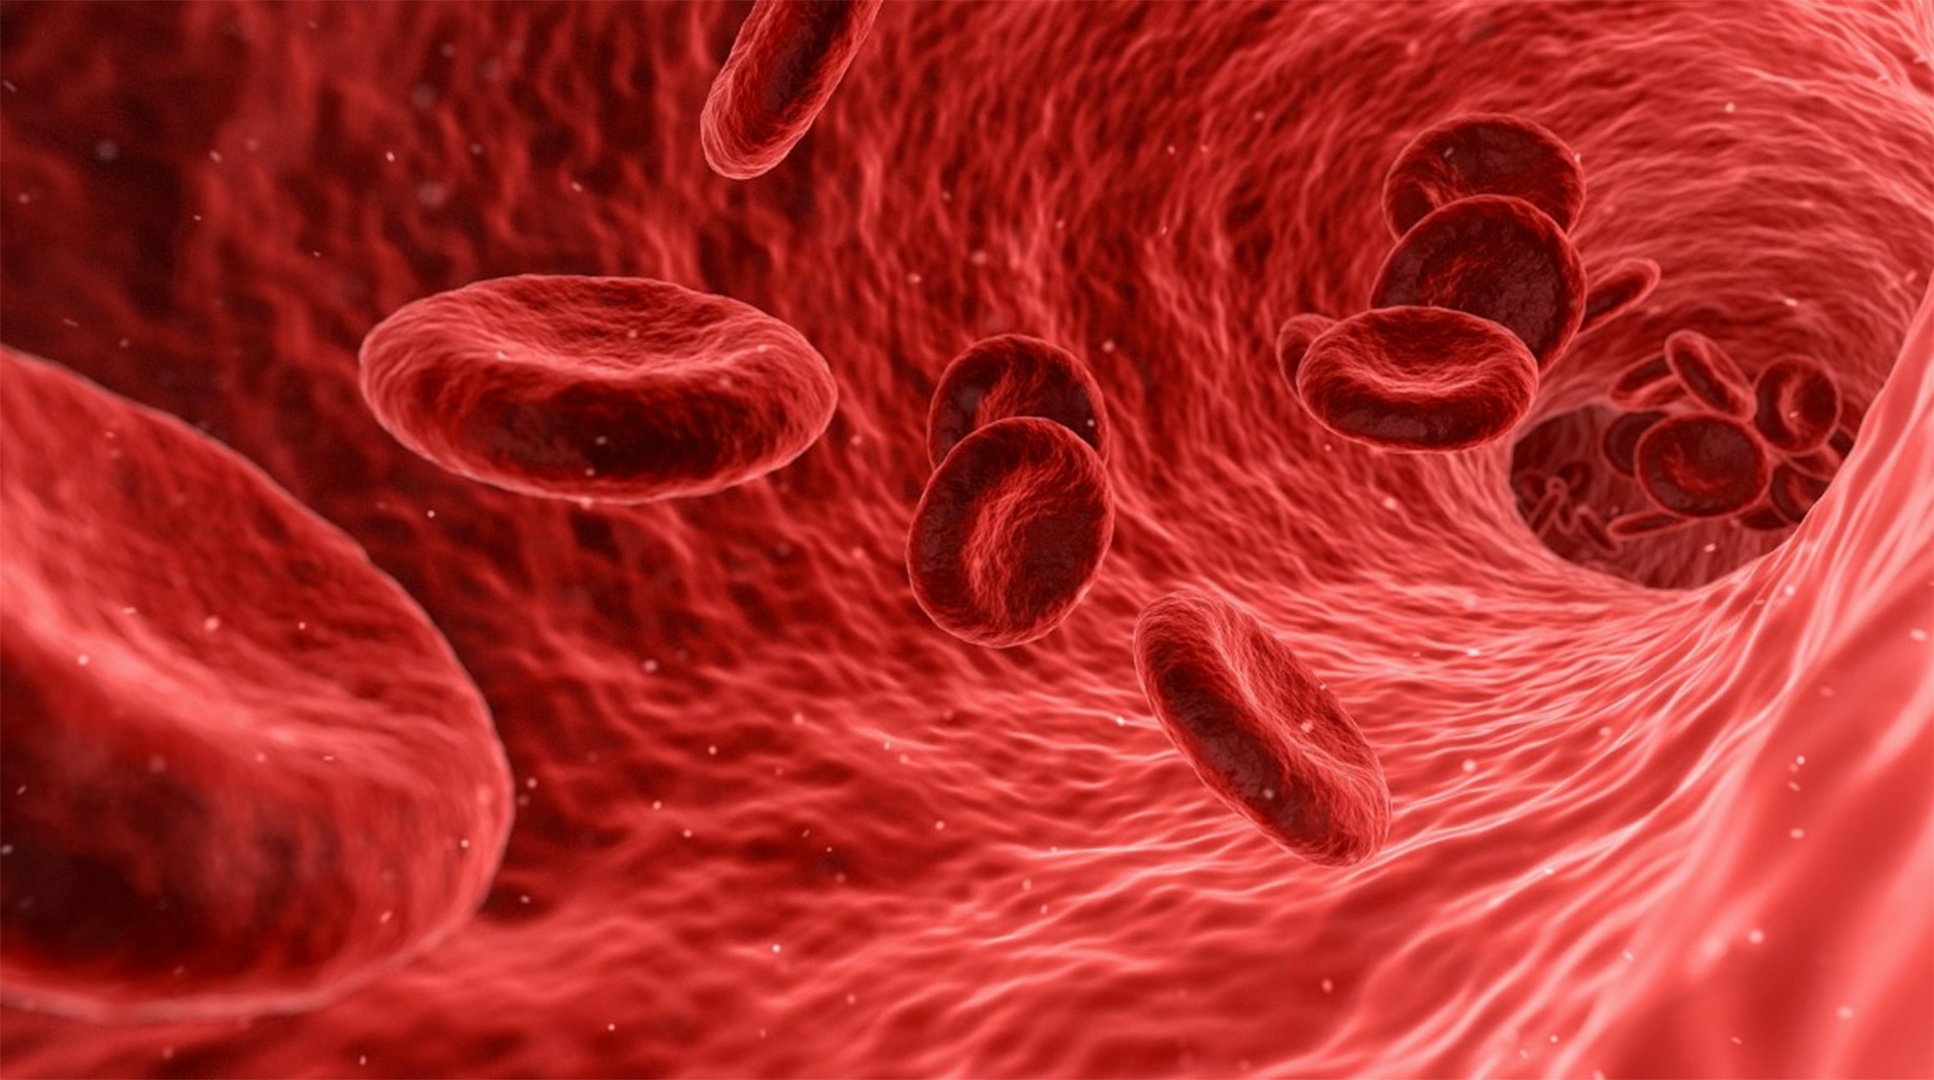  Illustration of red blood cells.